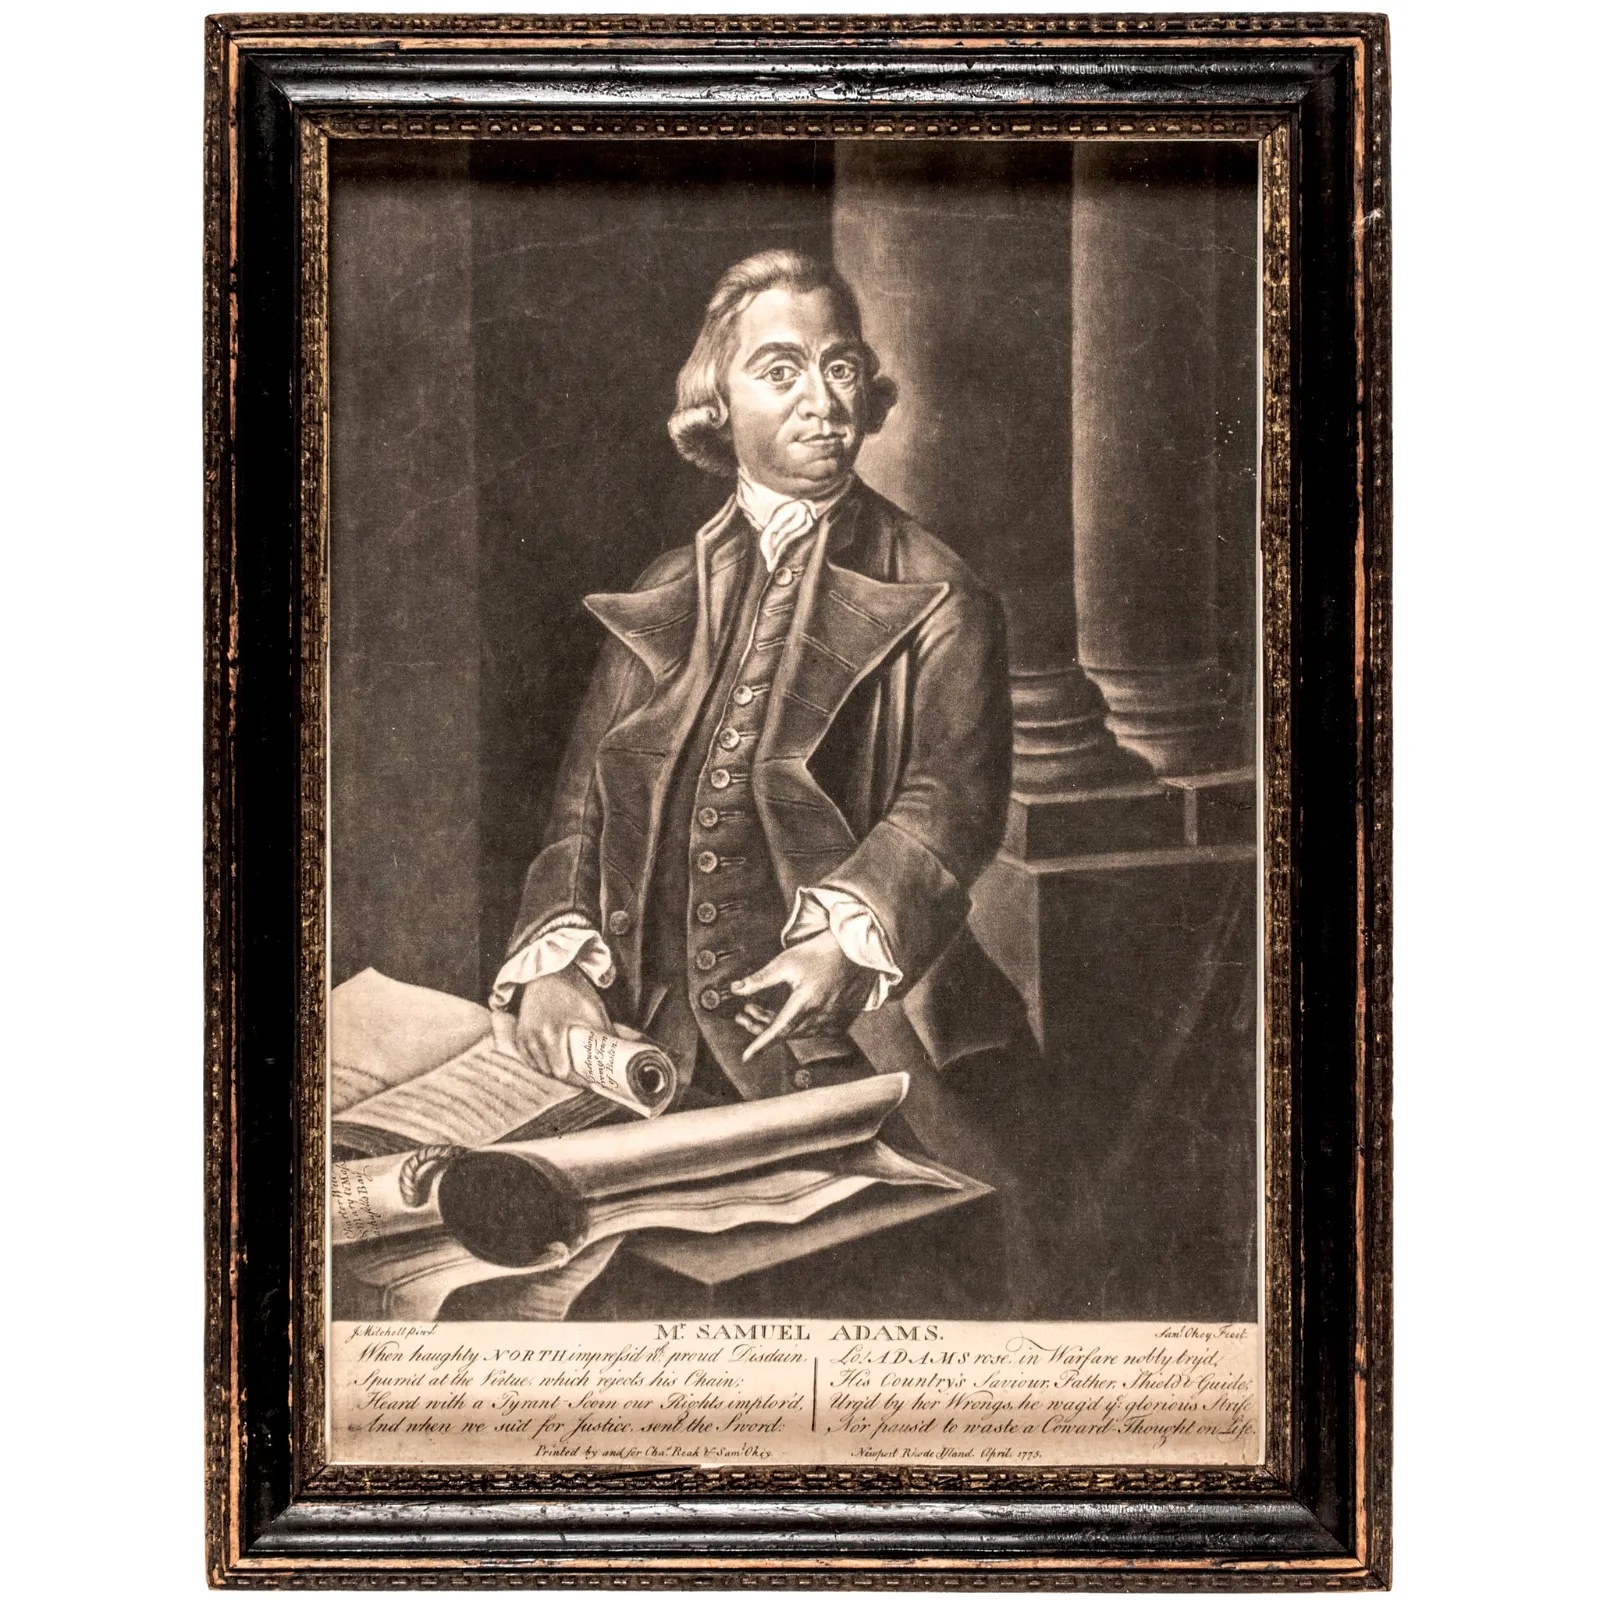 Samuel Adams mezzotint portrait, estimated at $15,000-$20,000 at Early American.